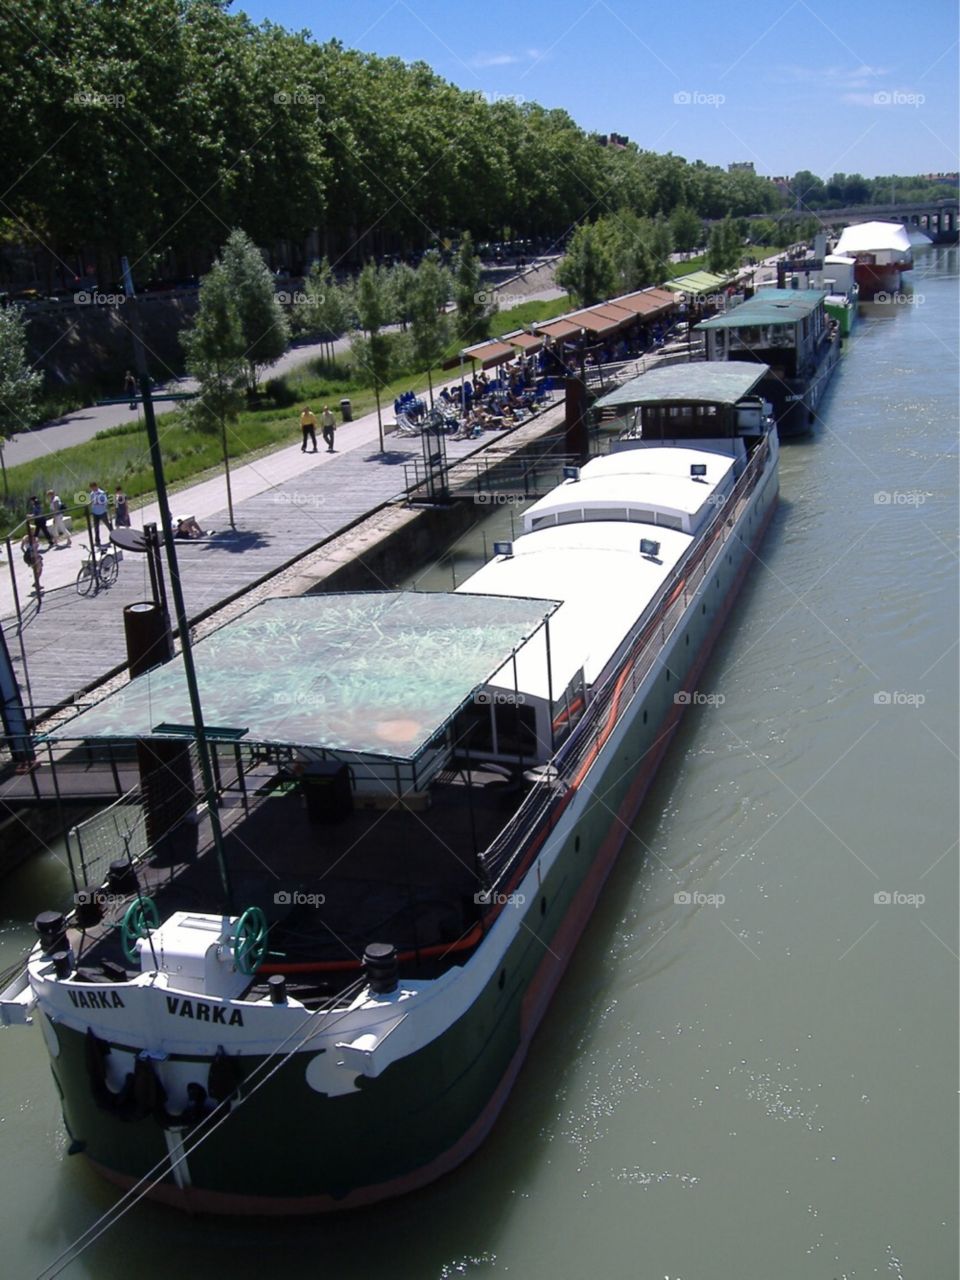 Restaurant boats on the river. Lyon, France. 